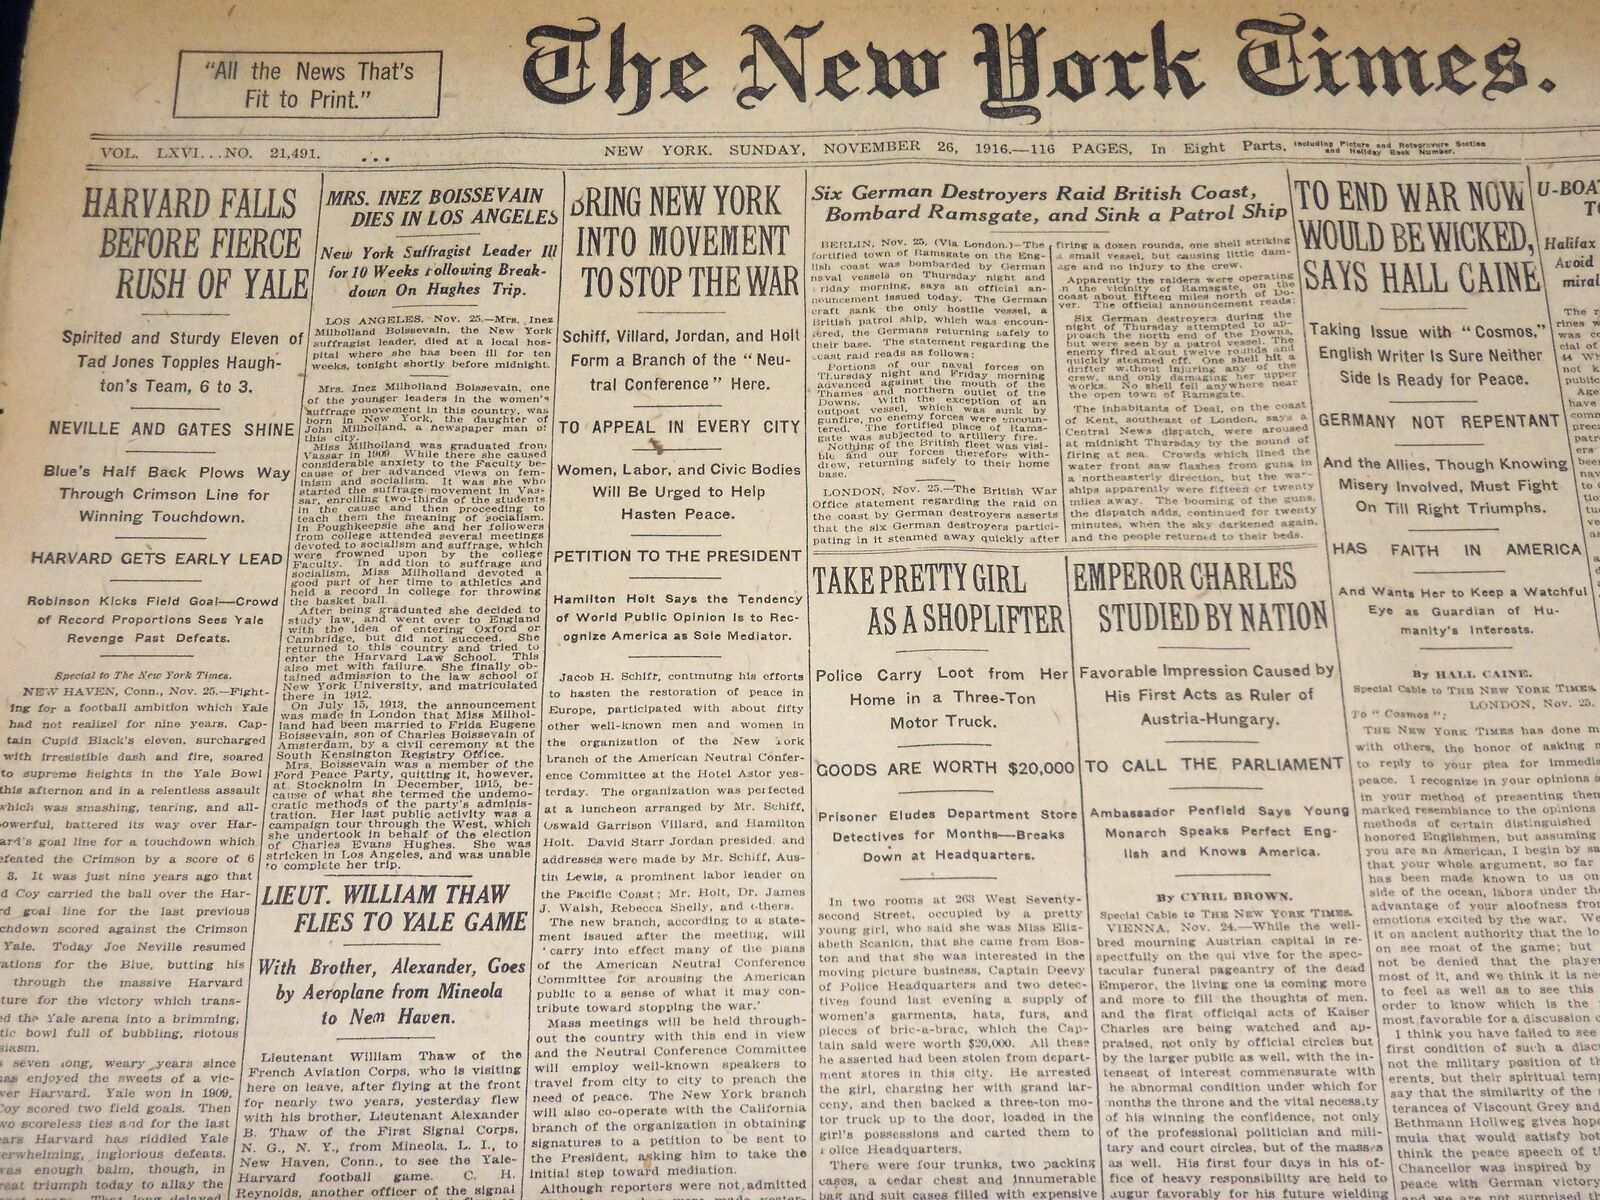 1916 NOVEMBER 26 NEW YORK TIMES - HARVARD FALLS TO FIERCE RUSH OF YALE - NT 7734